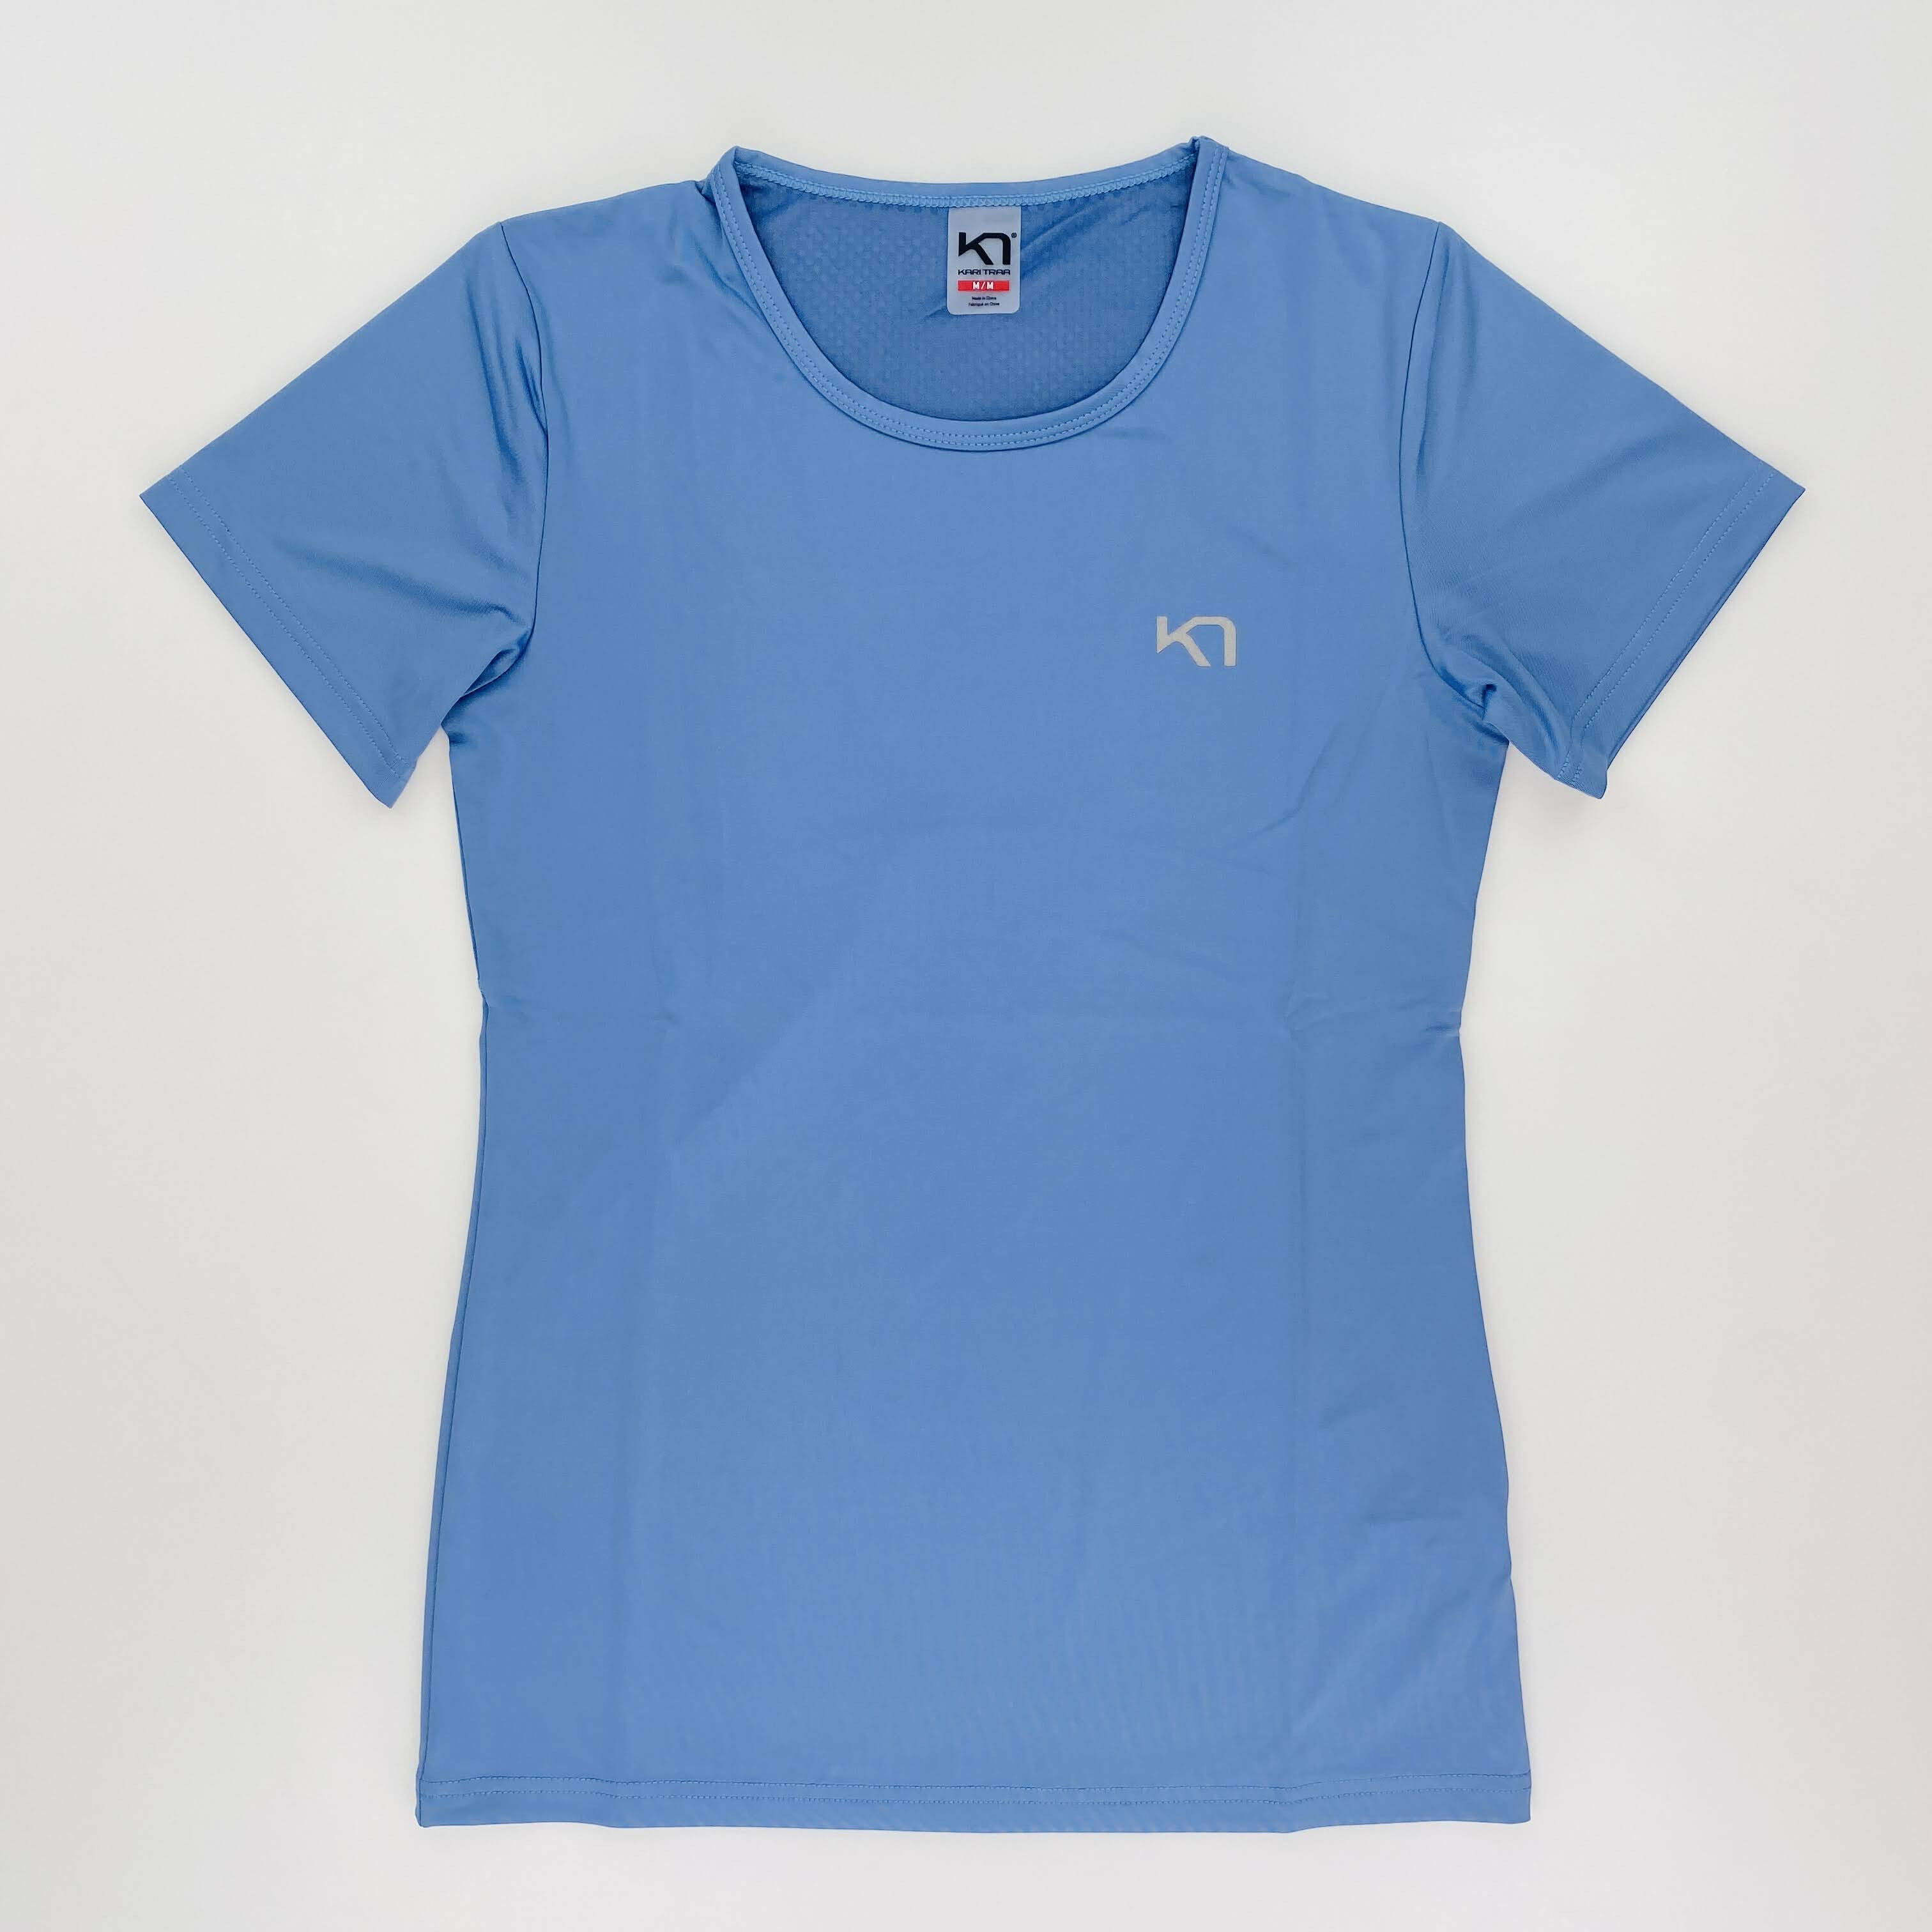 Kari Traa Mari Tee - Segunda Mano Camiseta - Mujer - Azul - M | Hardloop